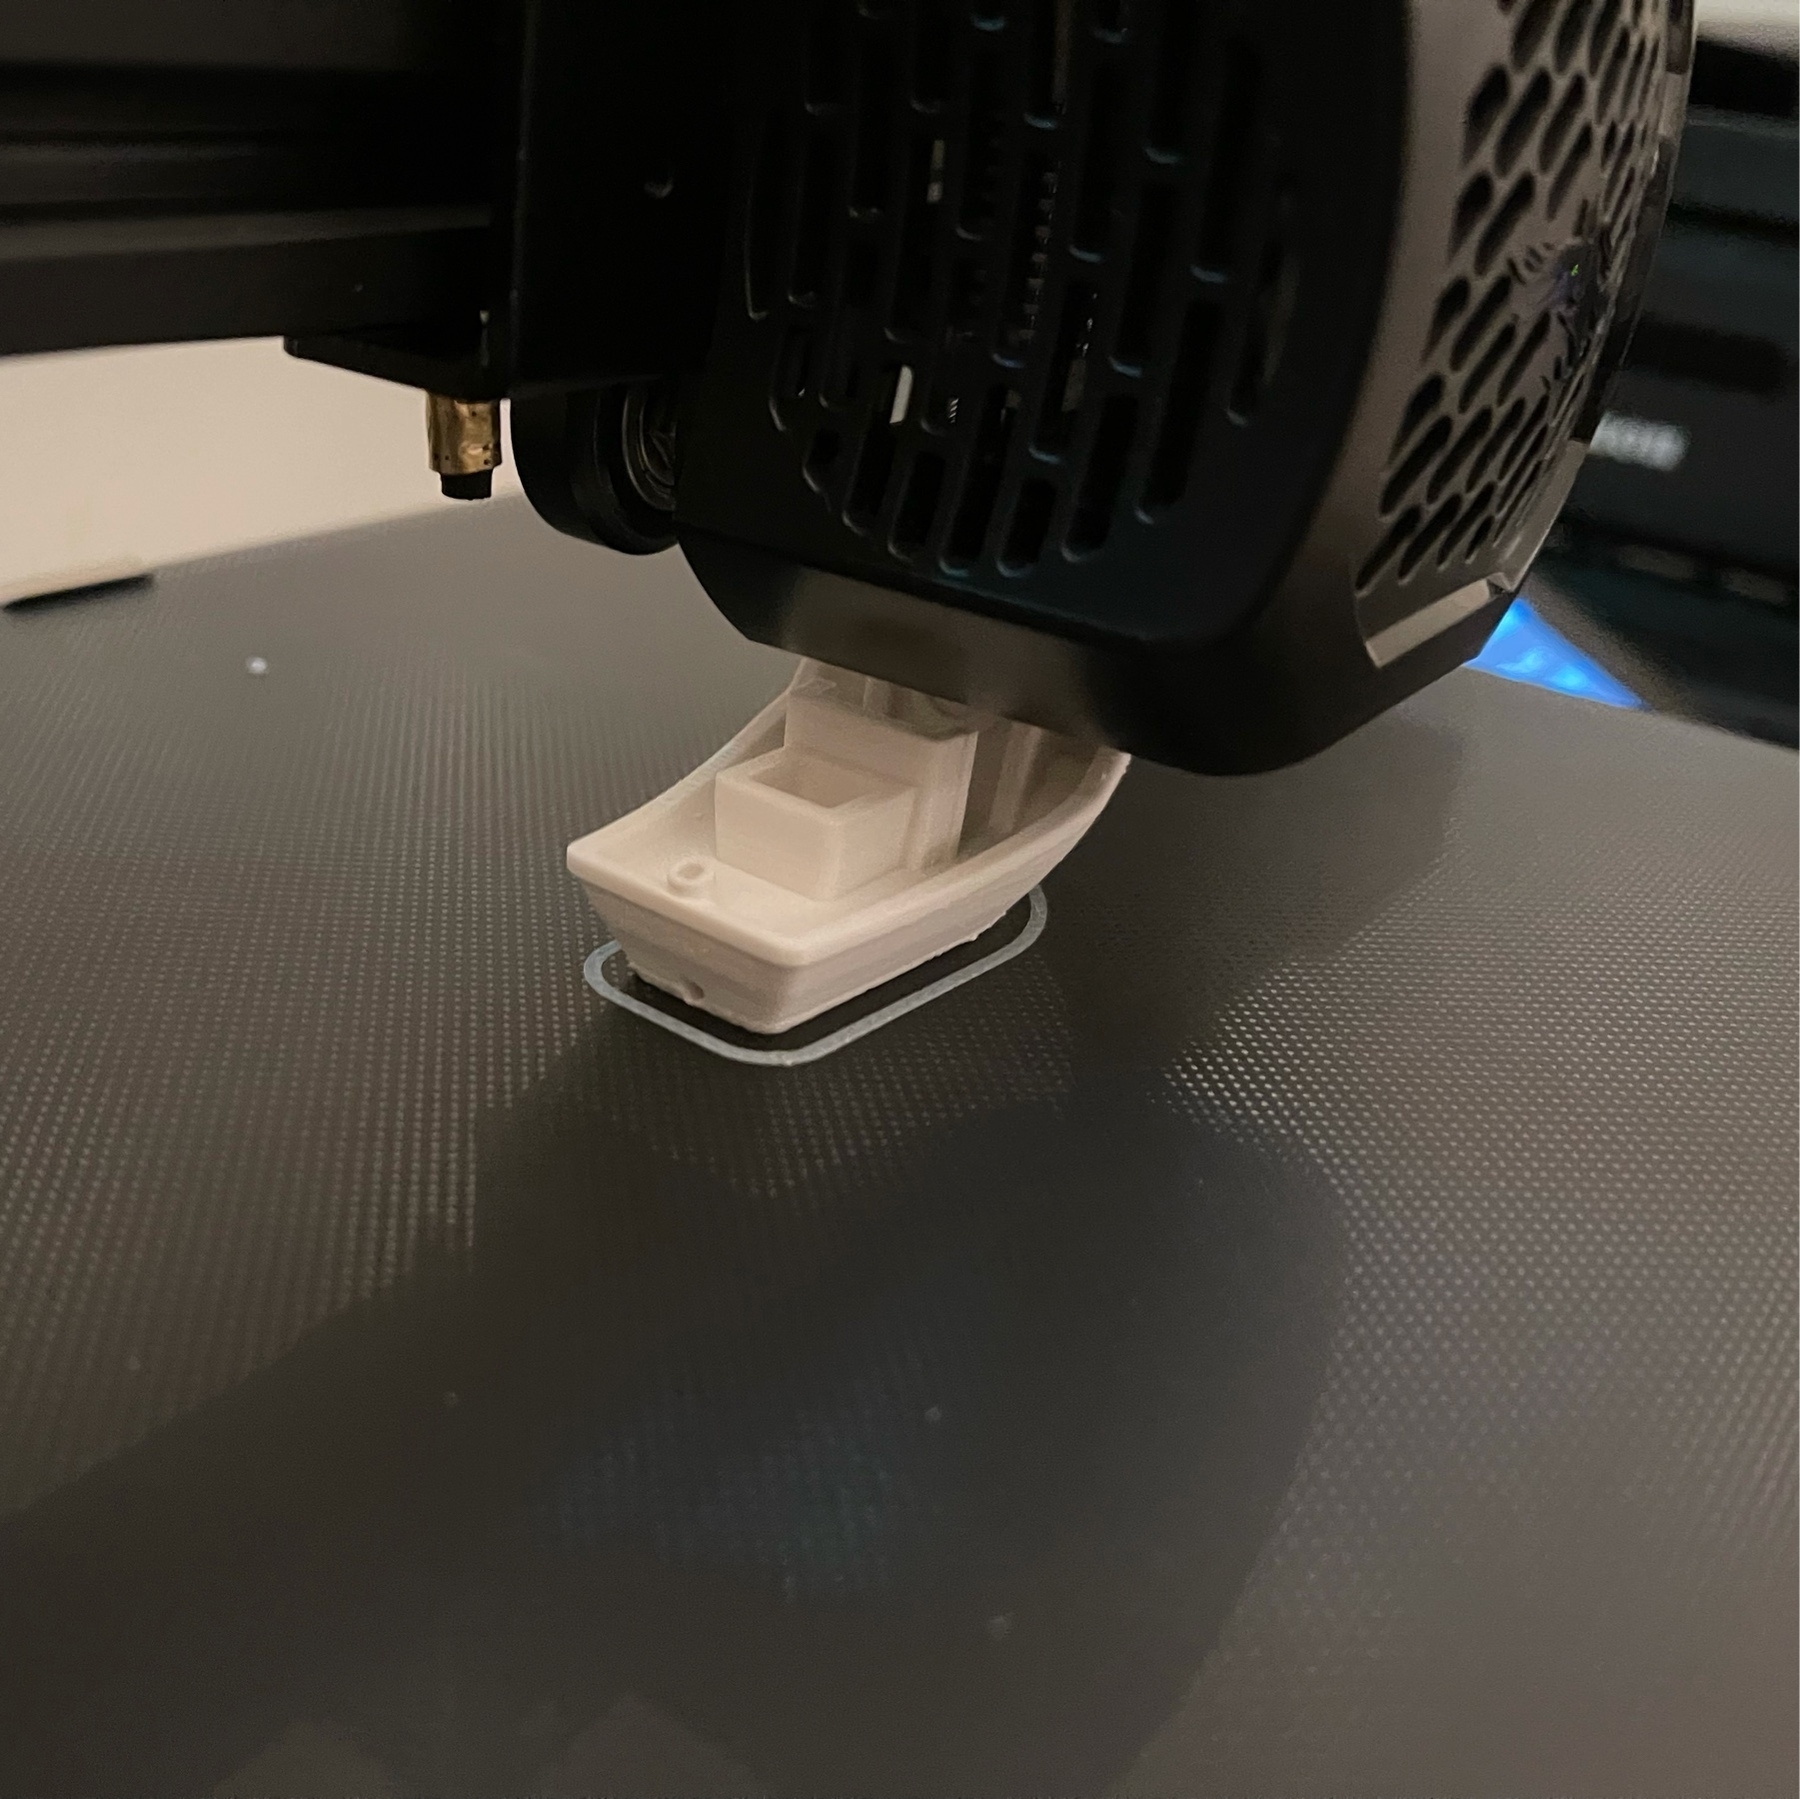 3D printer printing a "Benchy"